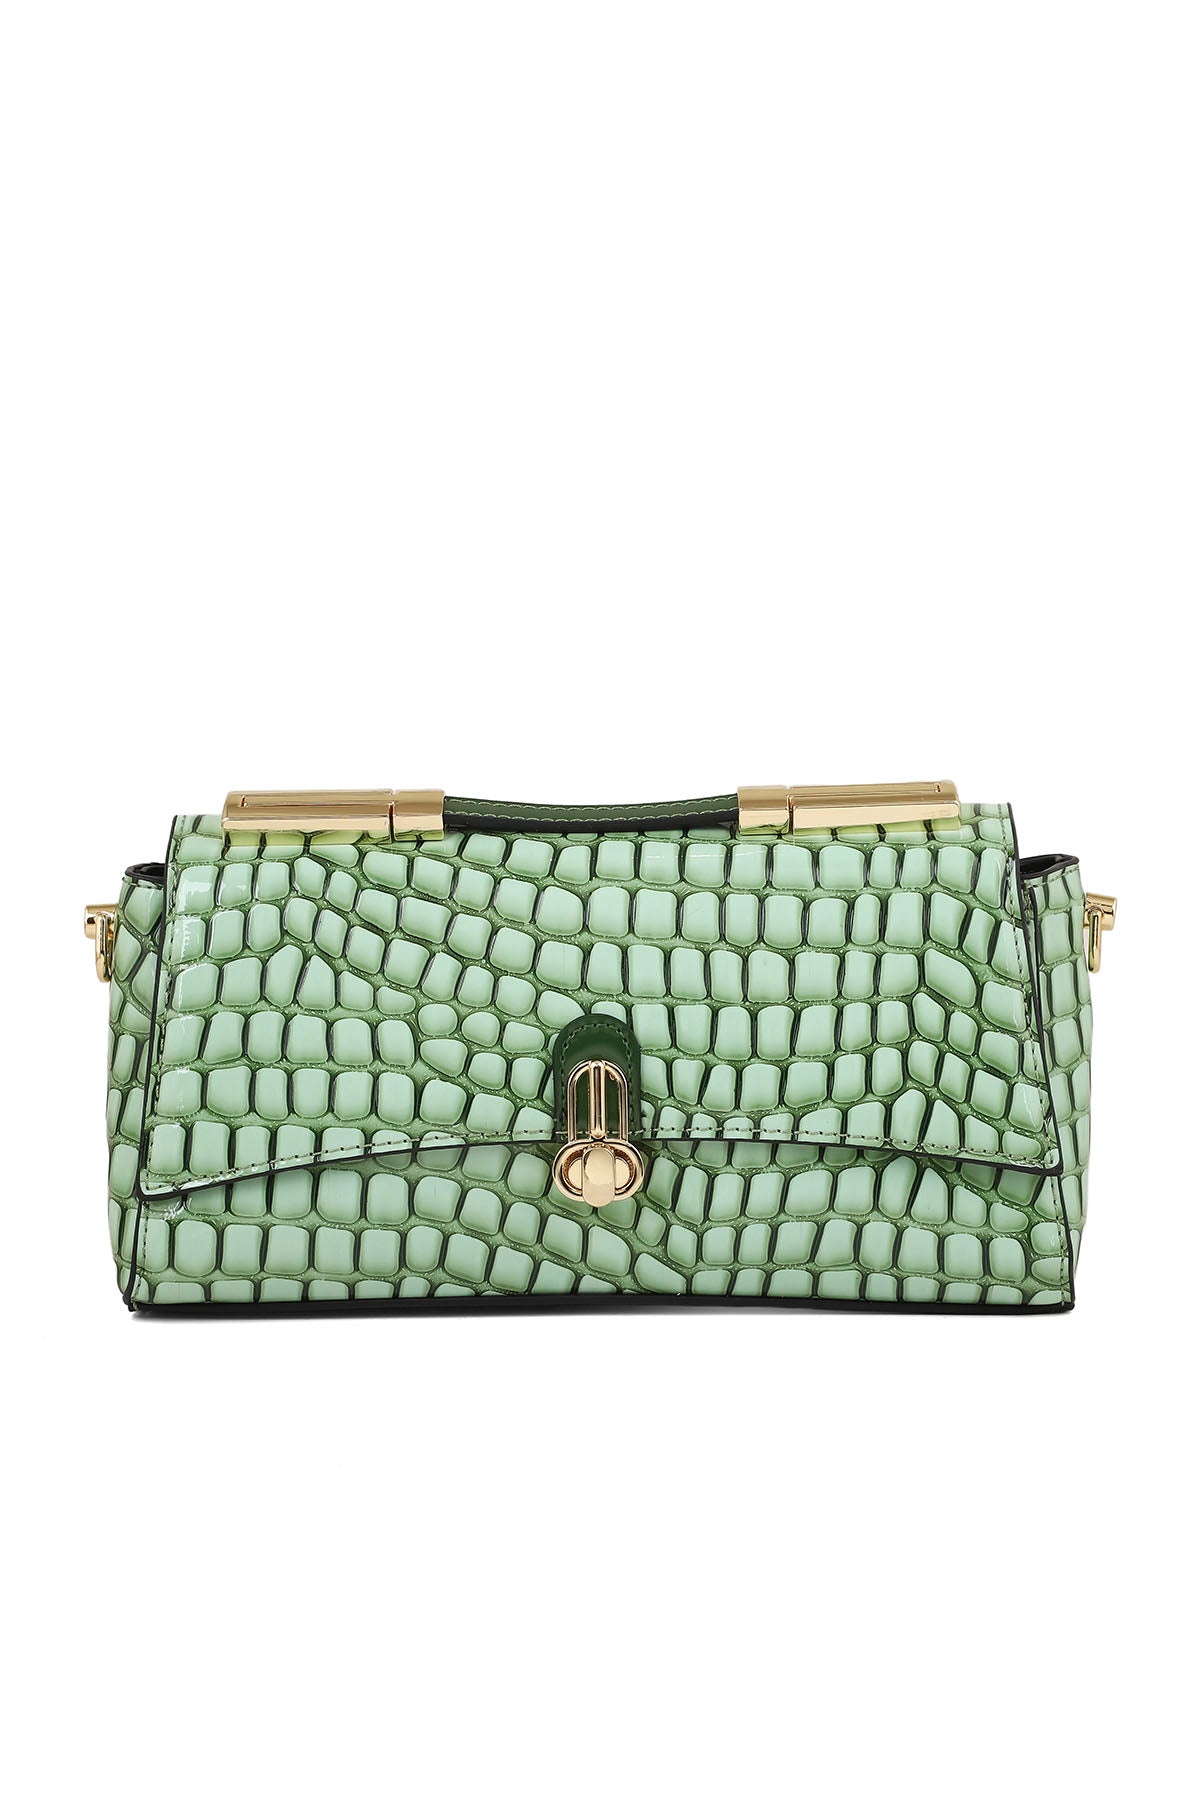 Top Handle Hand Bags B15078-Green